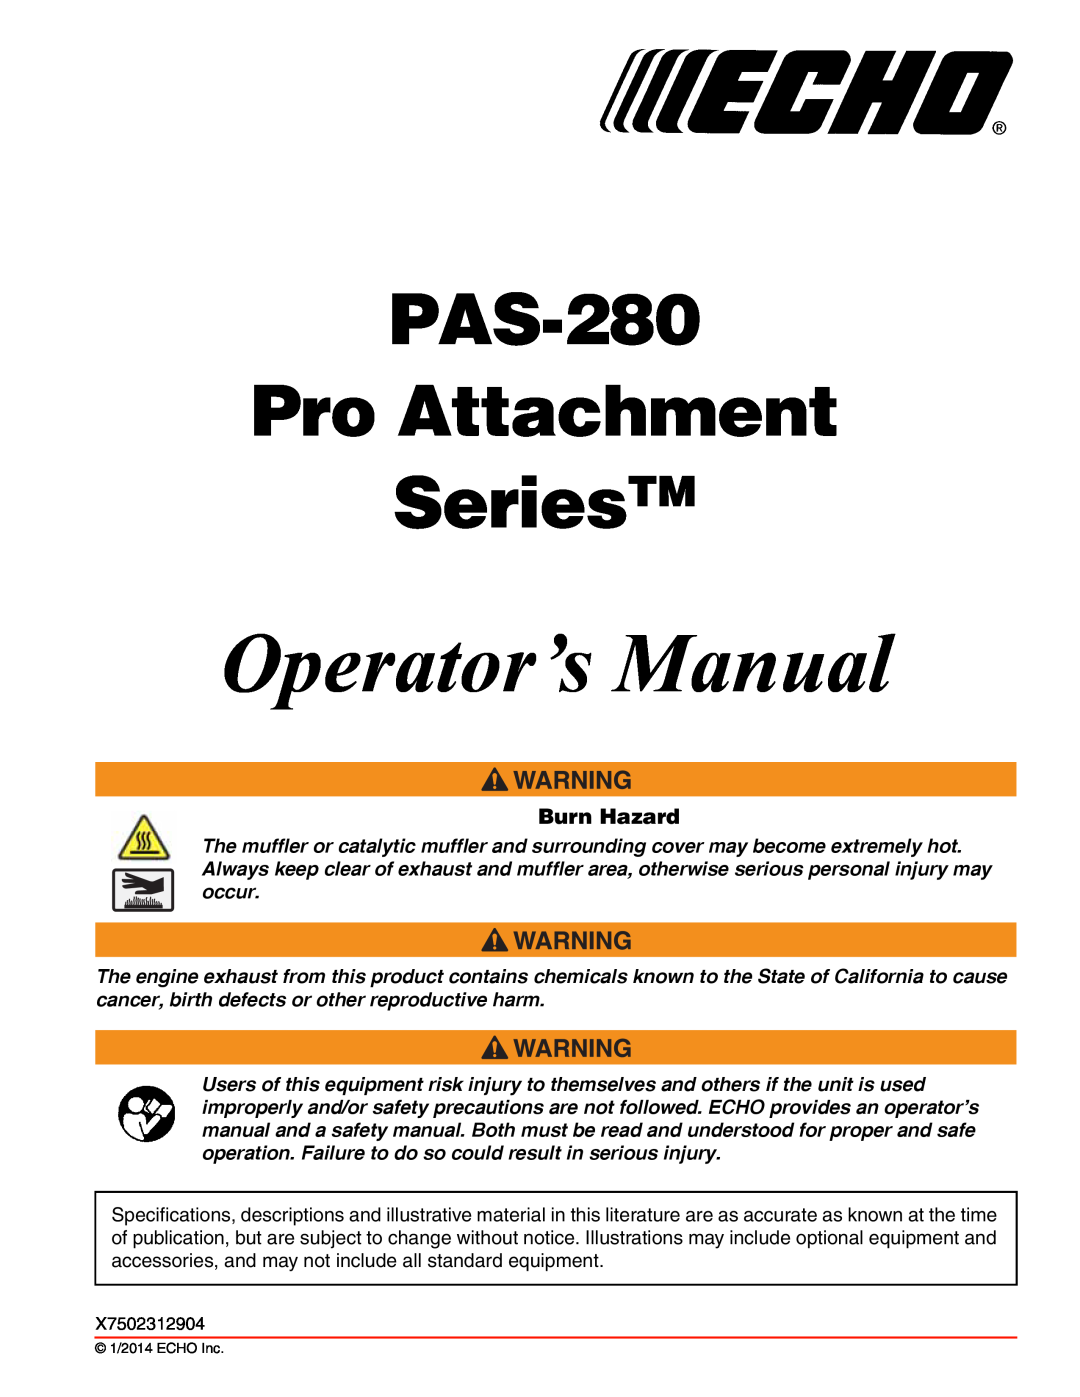 Echo specifications Burn Hazard, Operator’s Manual, PAS-280 Pro Attachment SeriesTM 